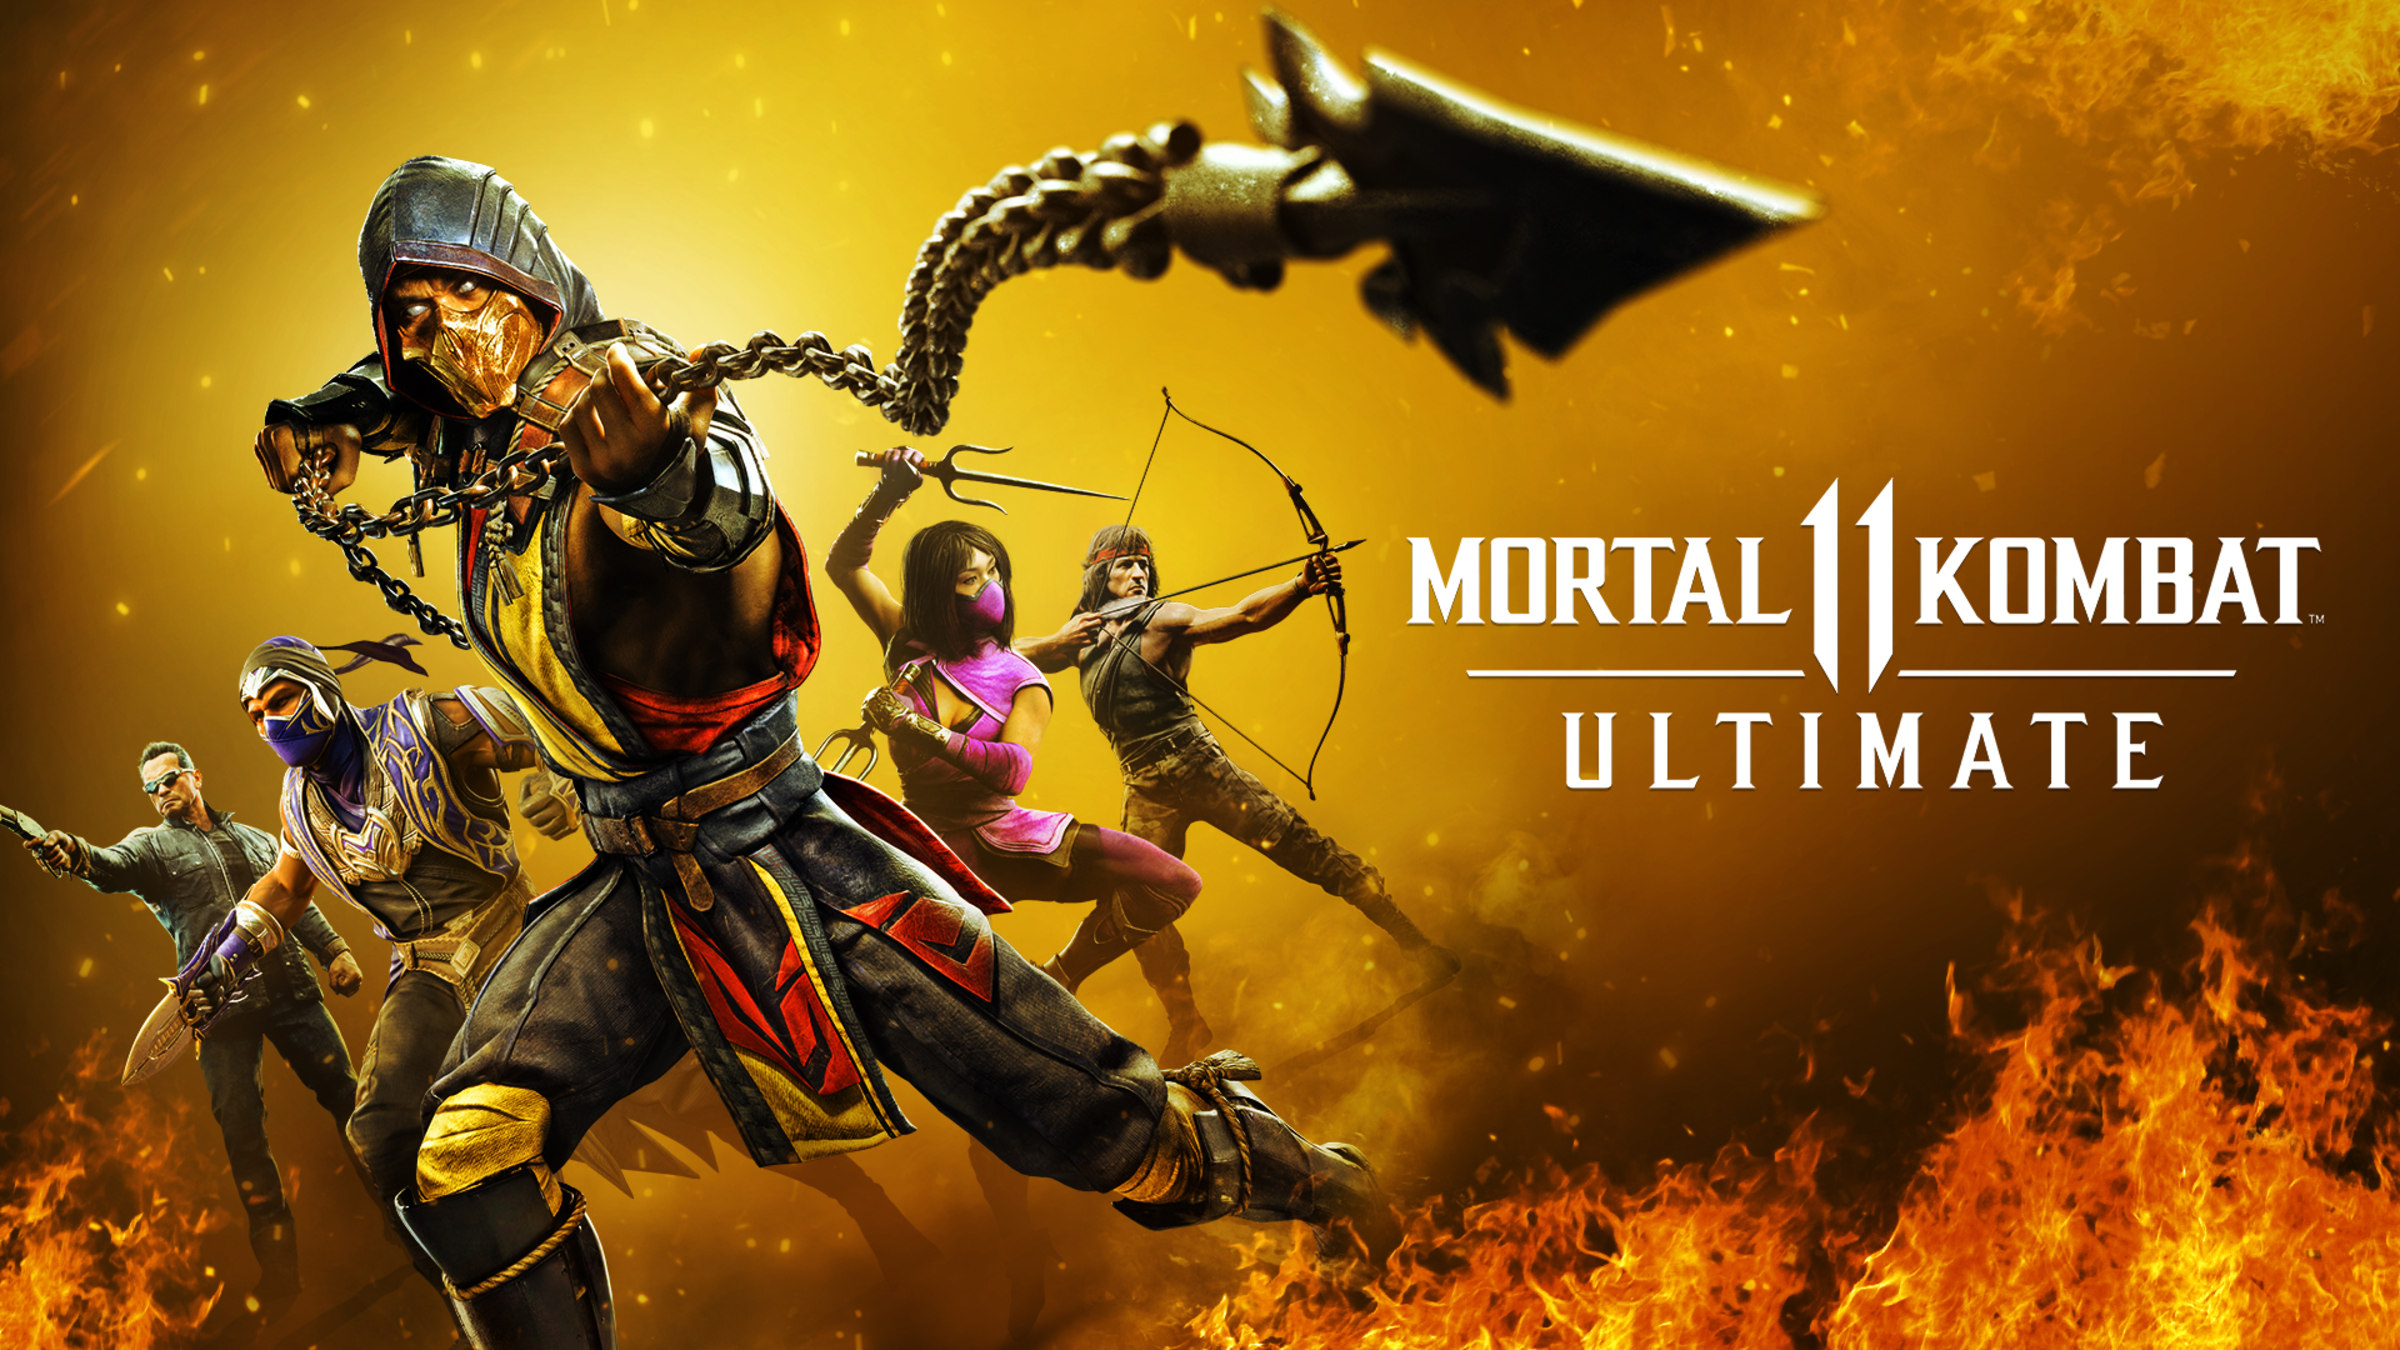 Mortal Kombat 11 Ultimate (Nintendo Switch Digital Download) $9